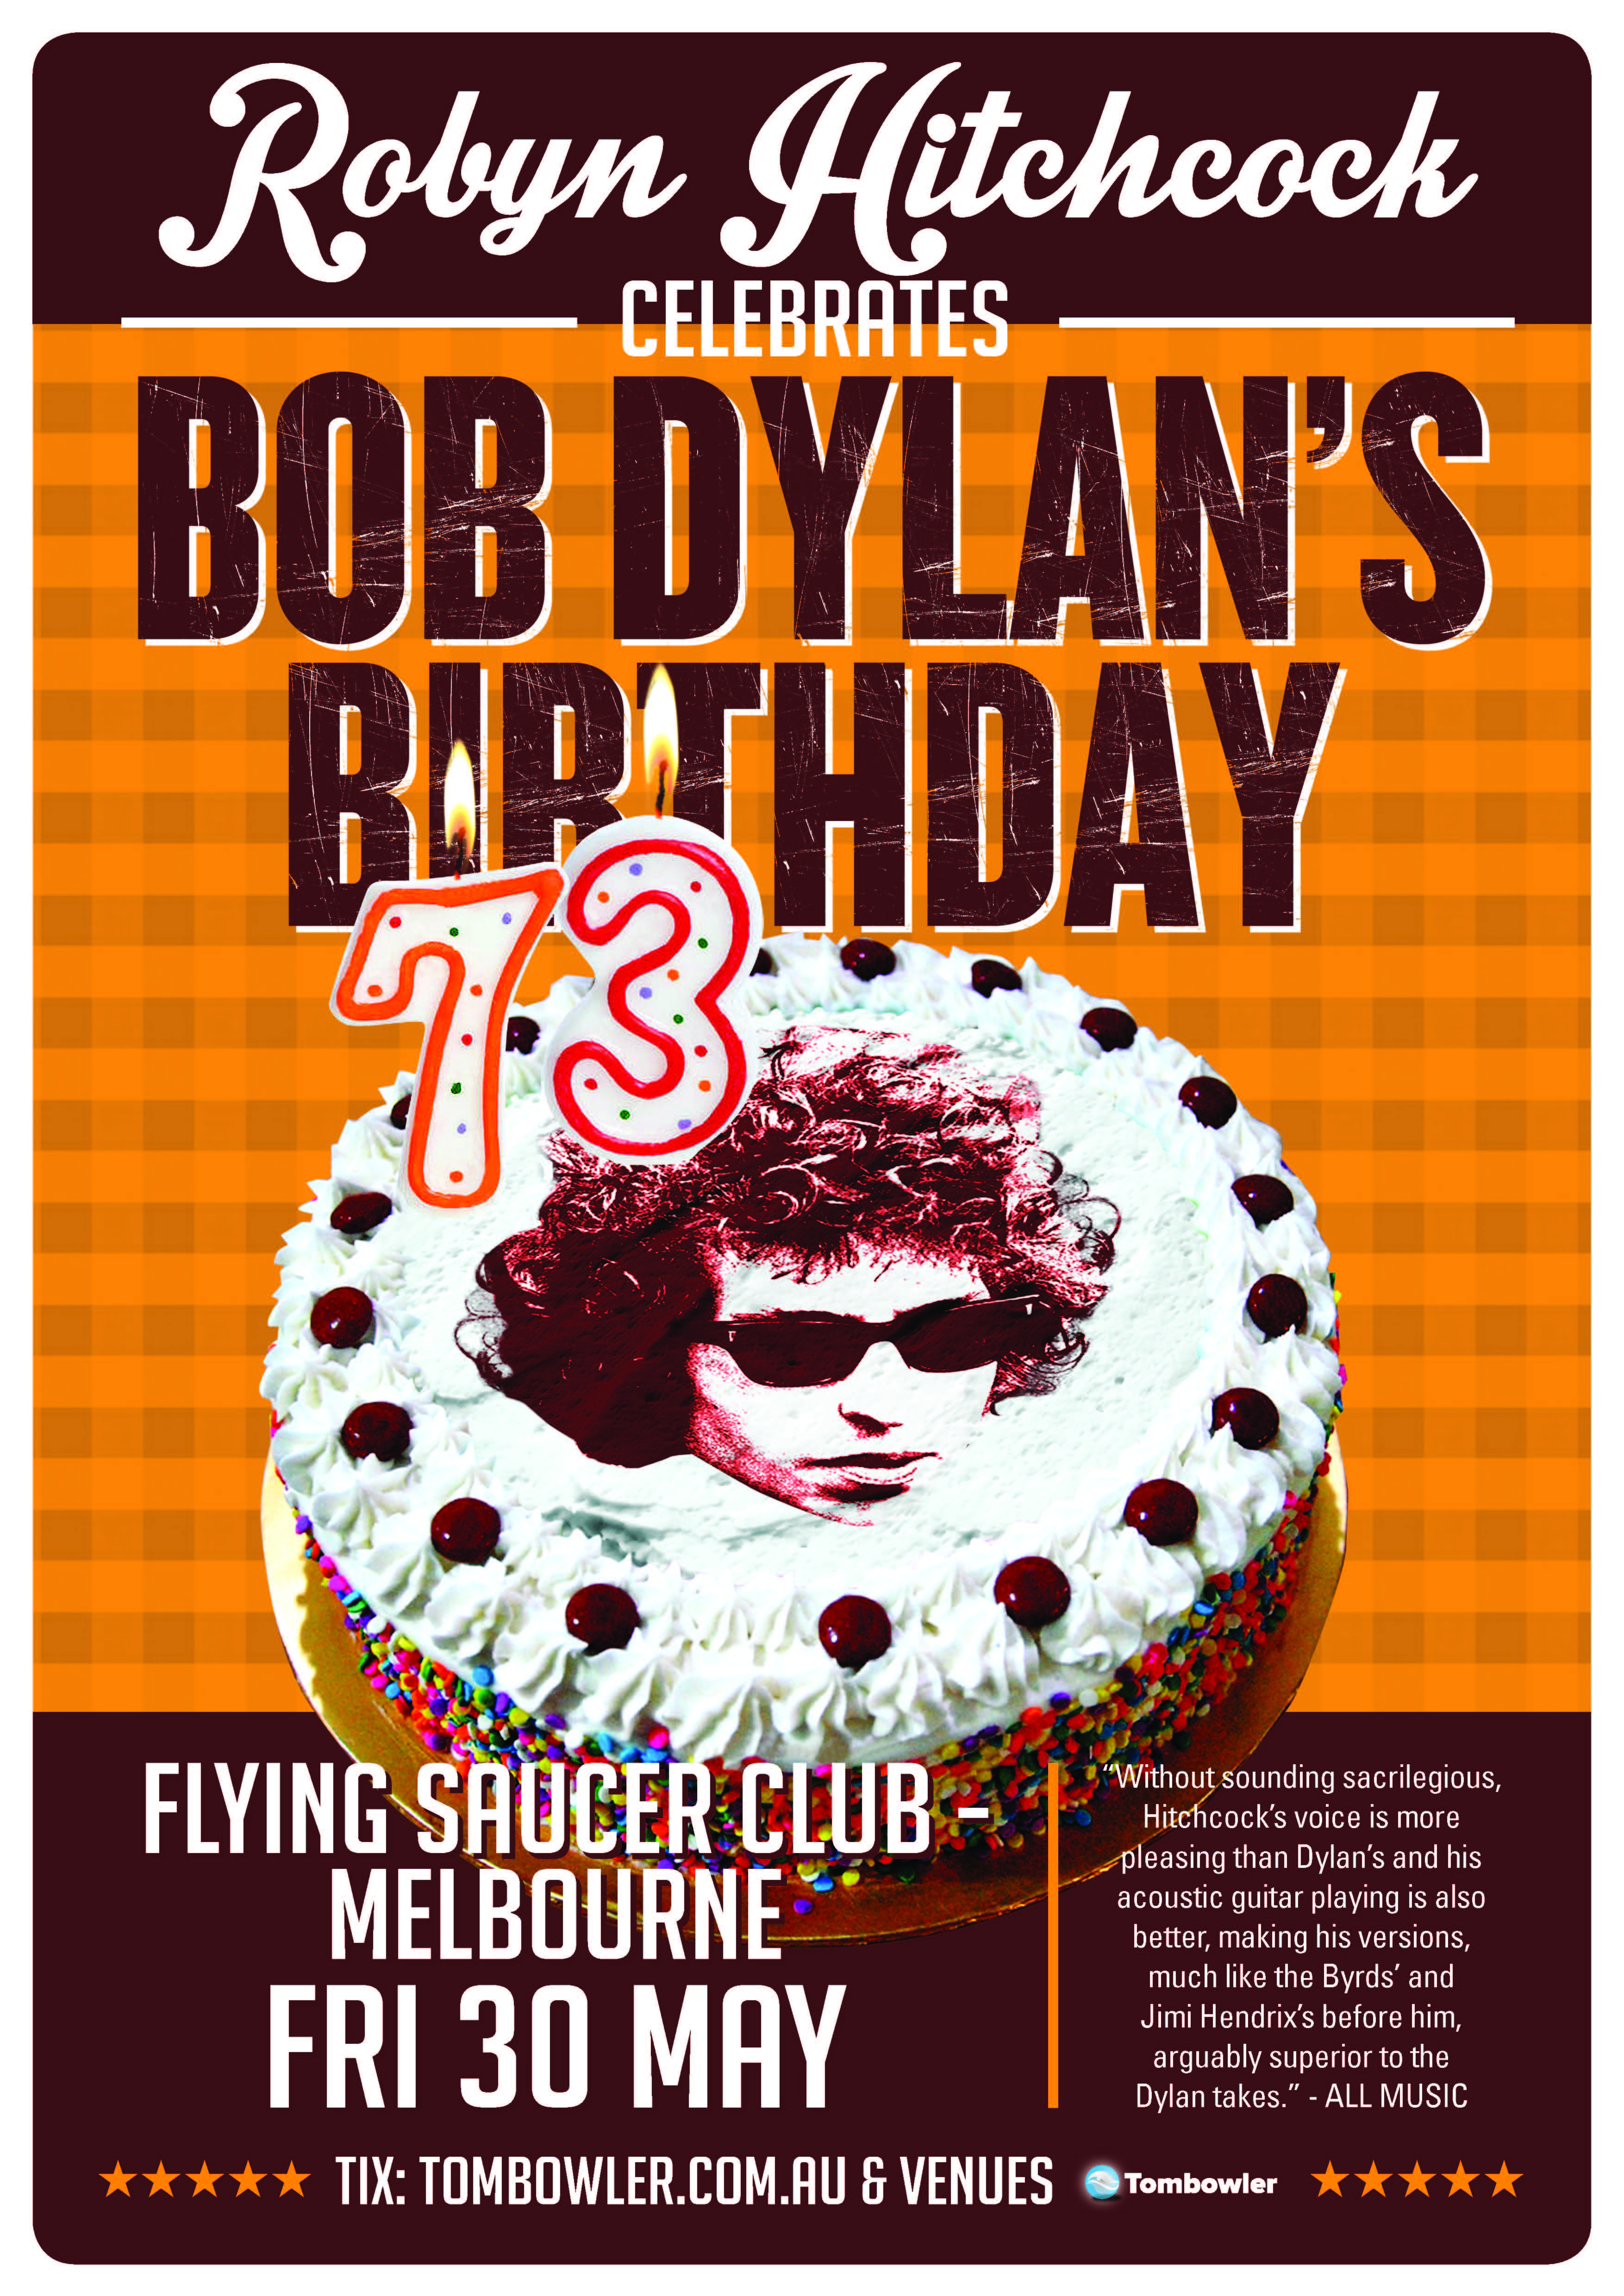 Robyn-Hitchcock-Celebrates-Bob-Dylan’s-73rd-Birthday